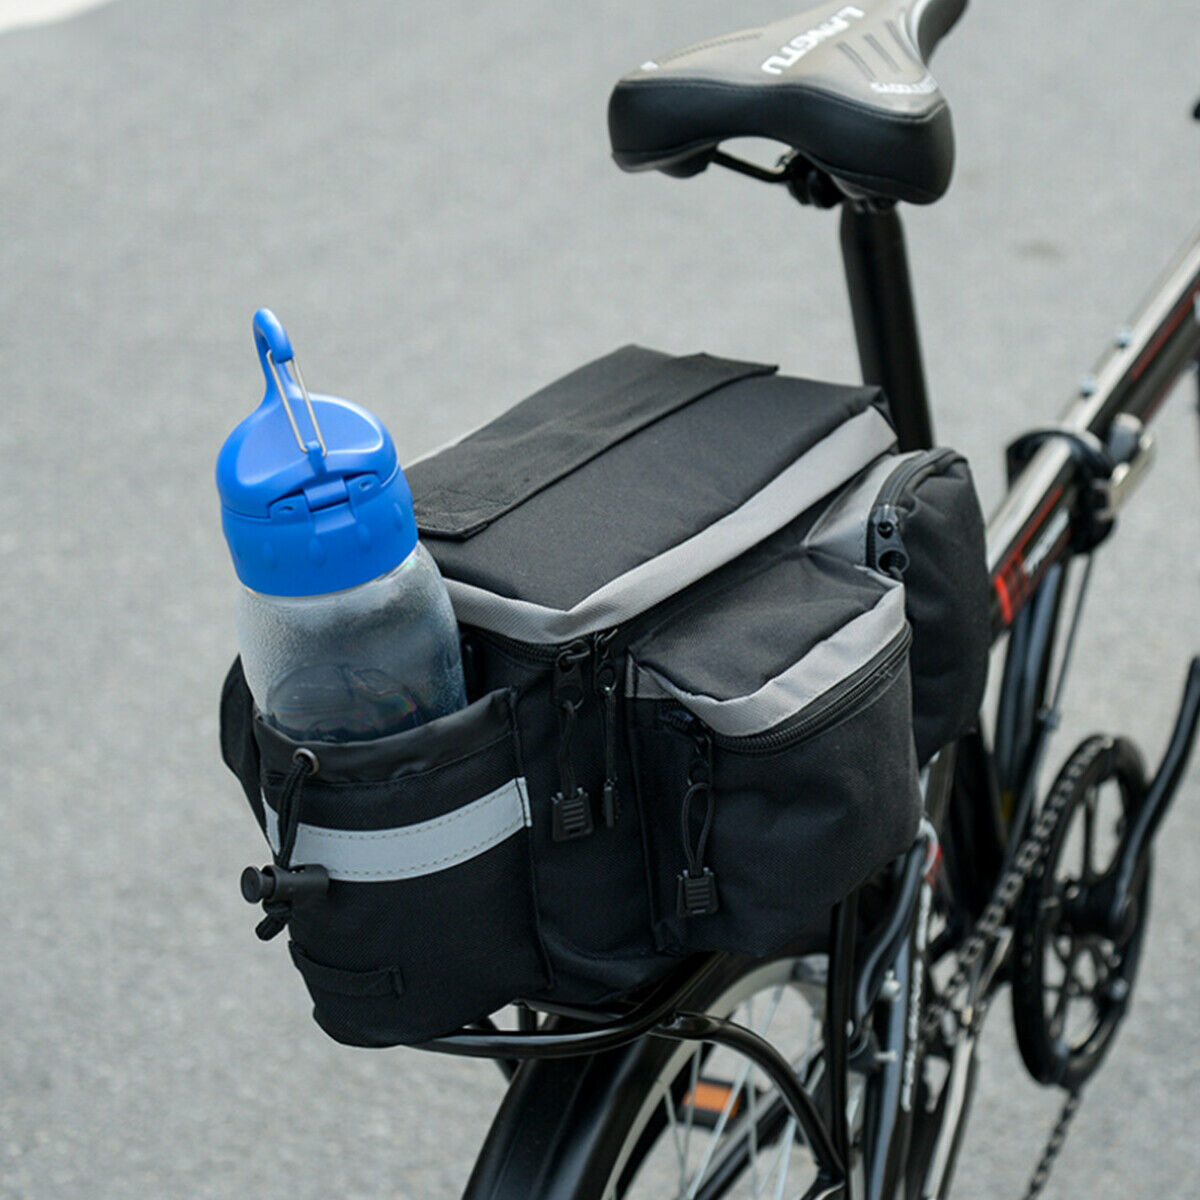 Bike MTB Trunk Bag with Rear Reflective Strip Bicycle Trunk Rear Bag Black NEW